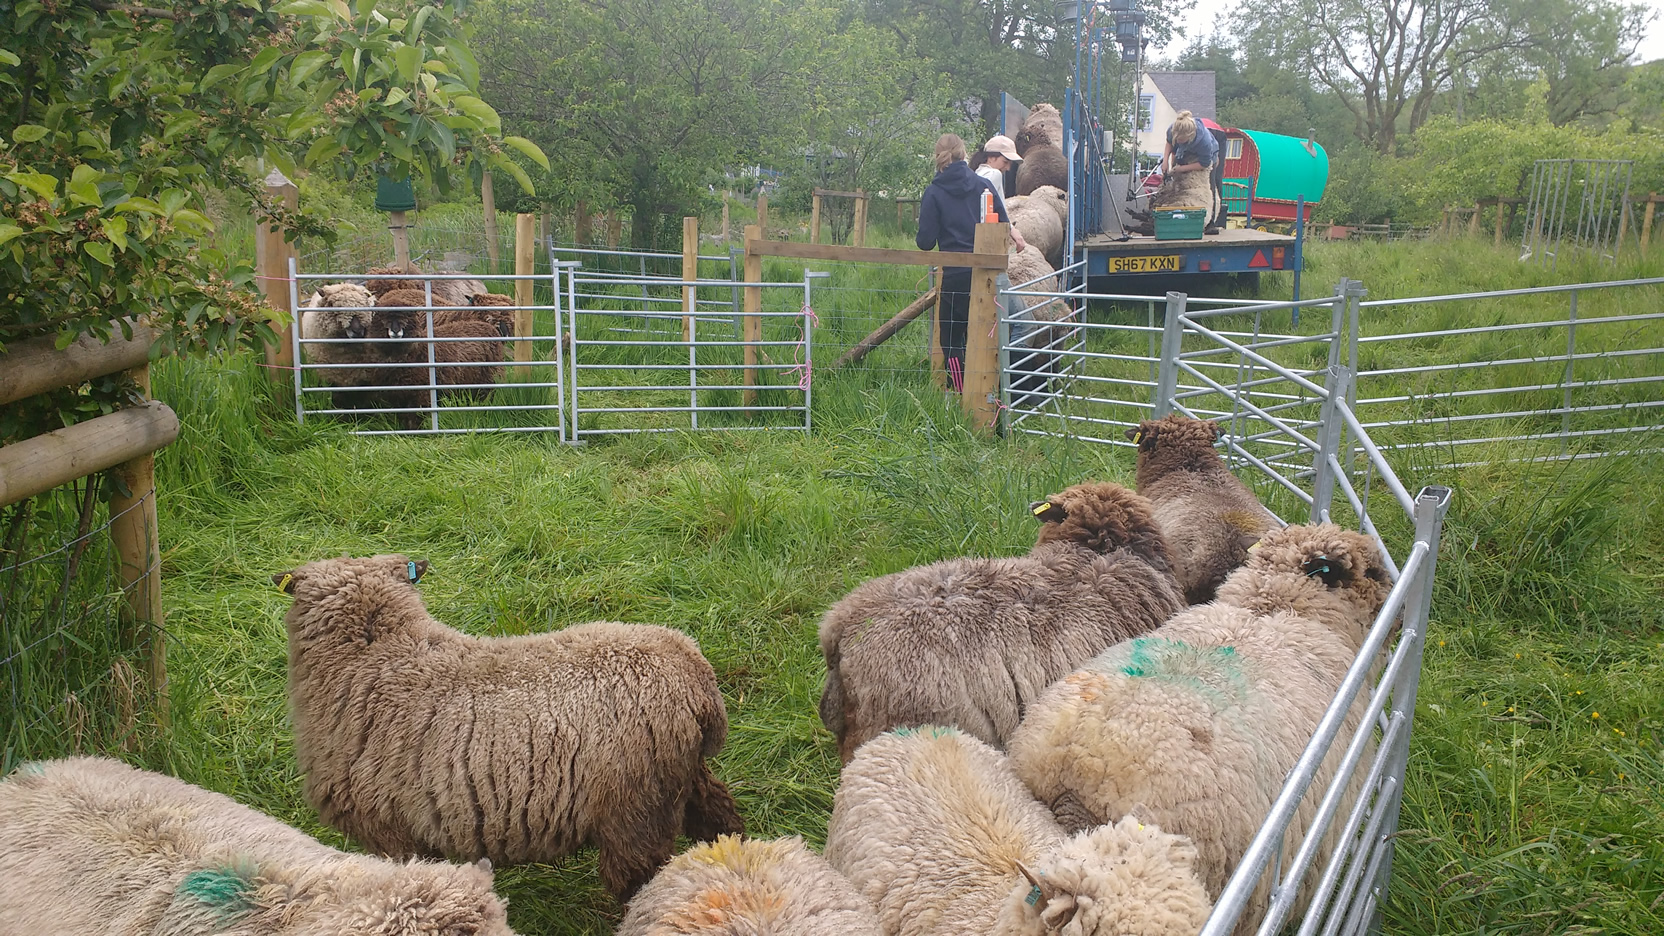 shearing underway looking on